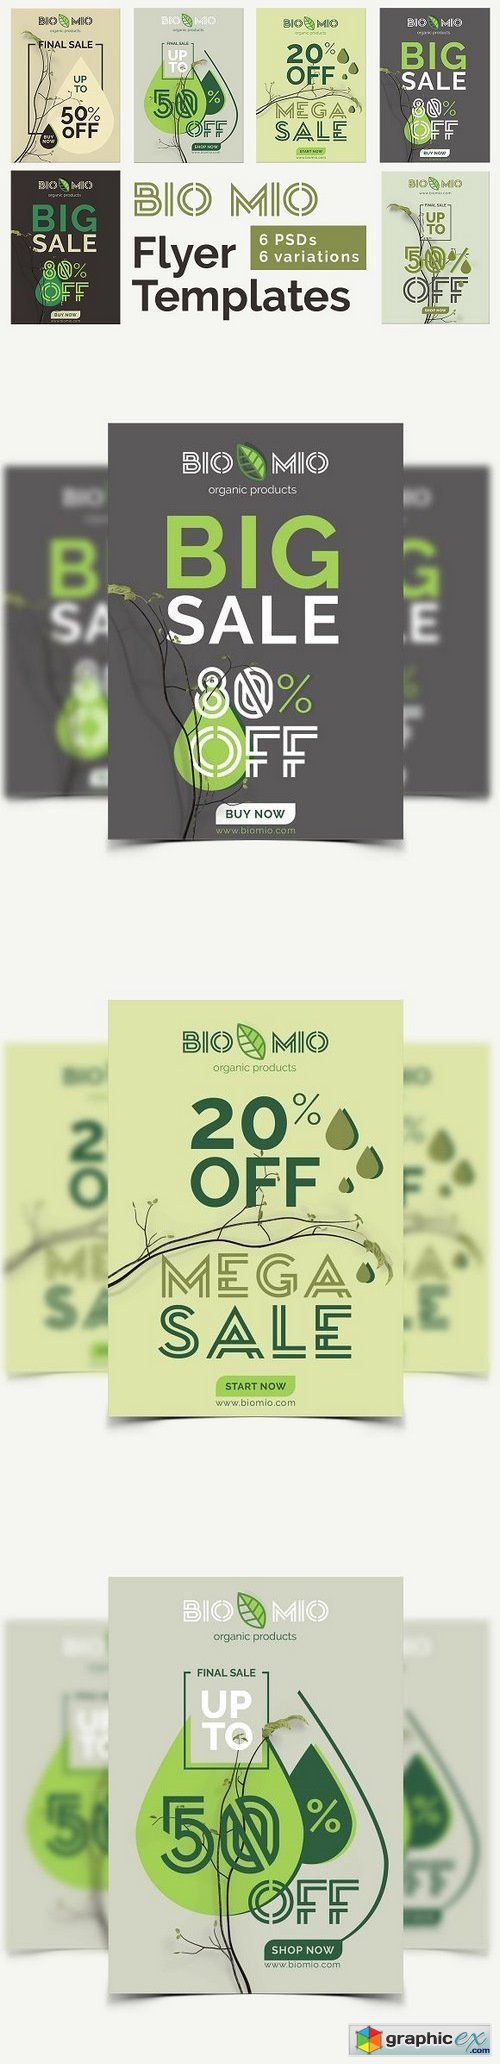 Bio Mio Promotional Flyer Templates